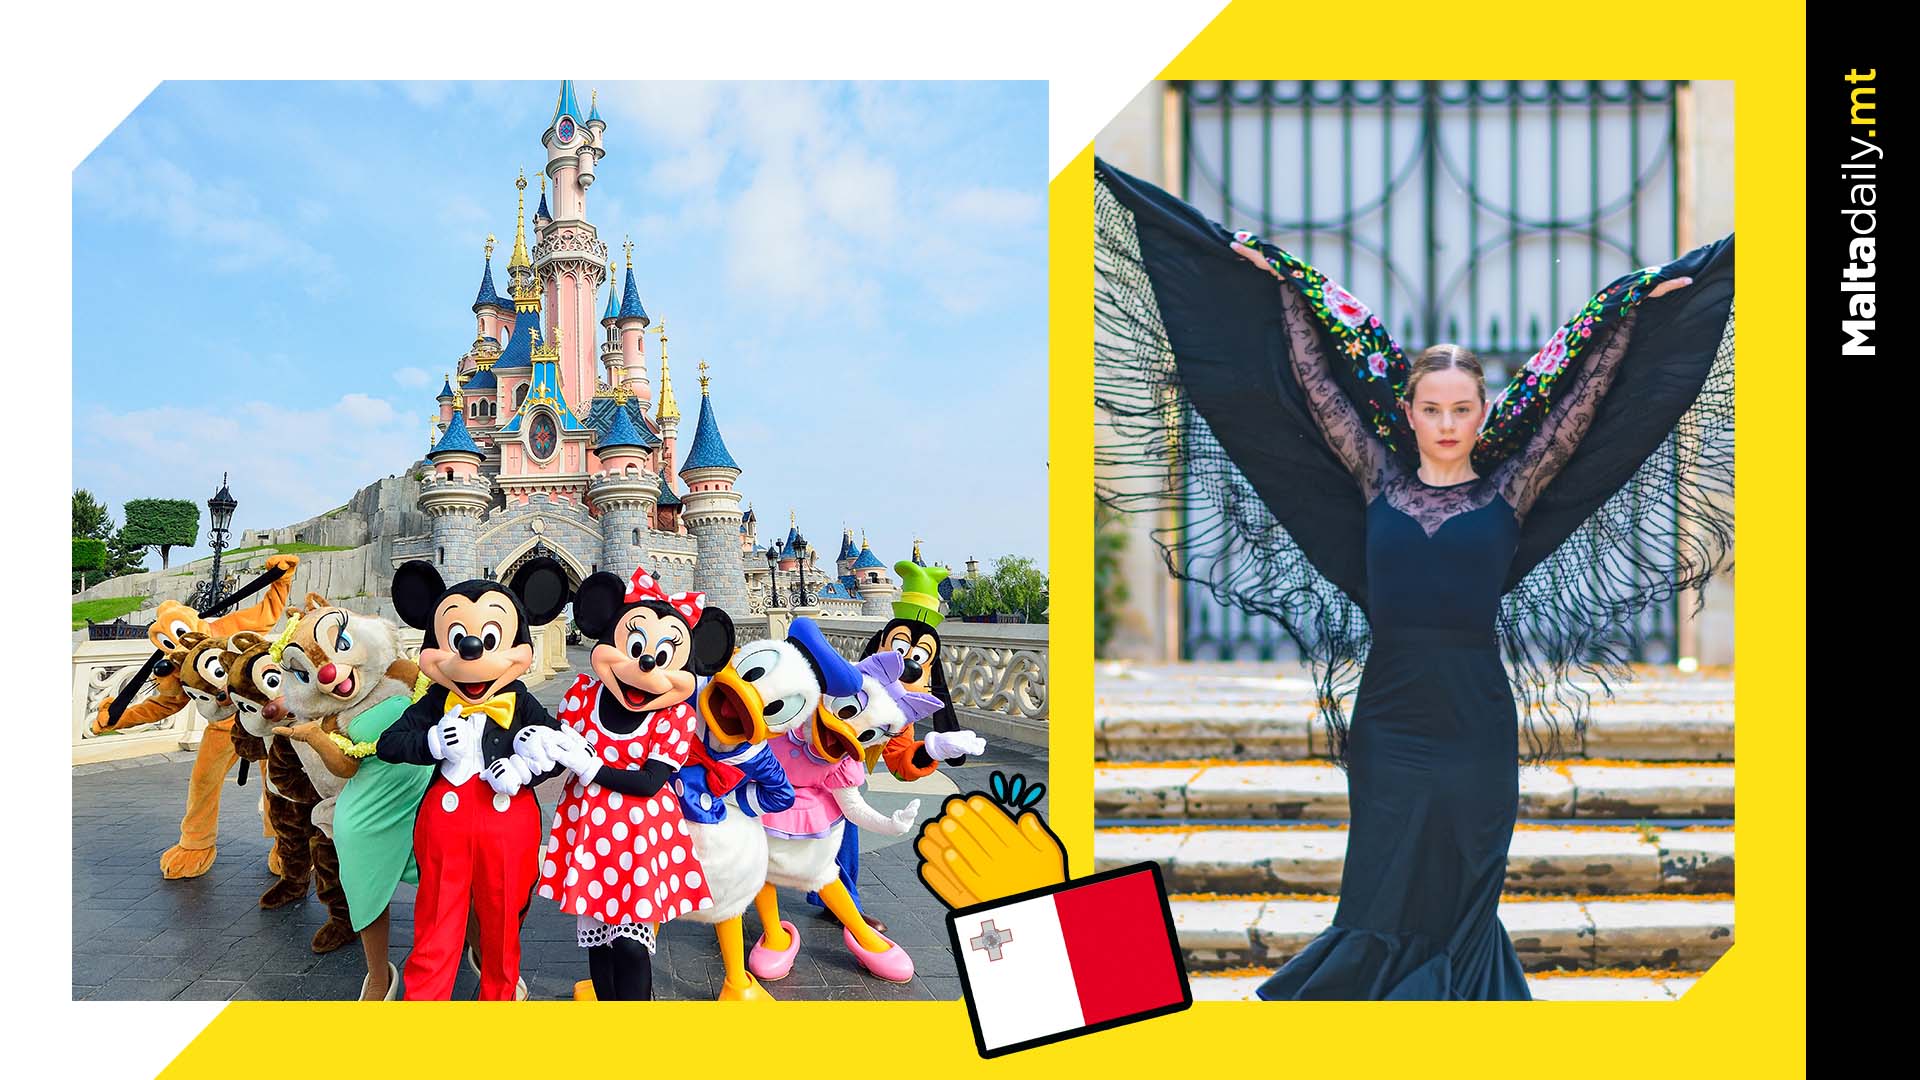 19 year old Maltese dancer offered job at Disneyland Paris